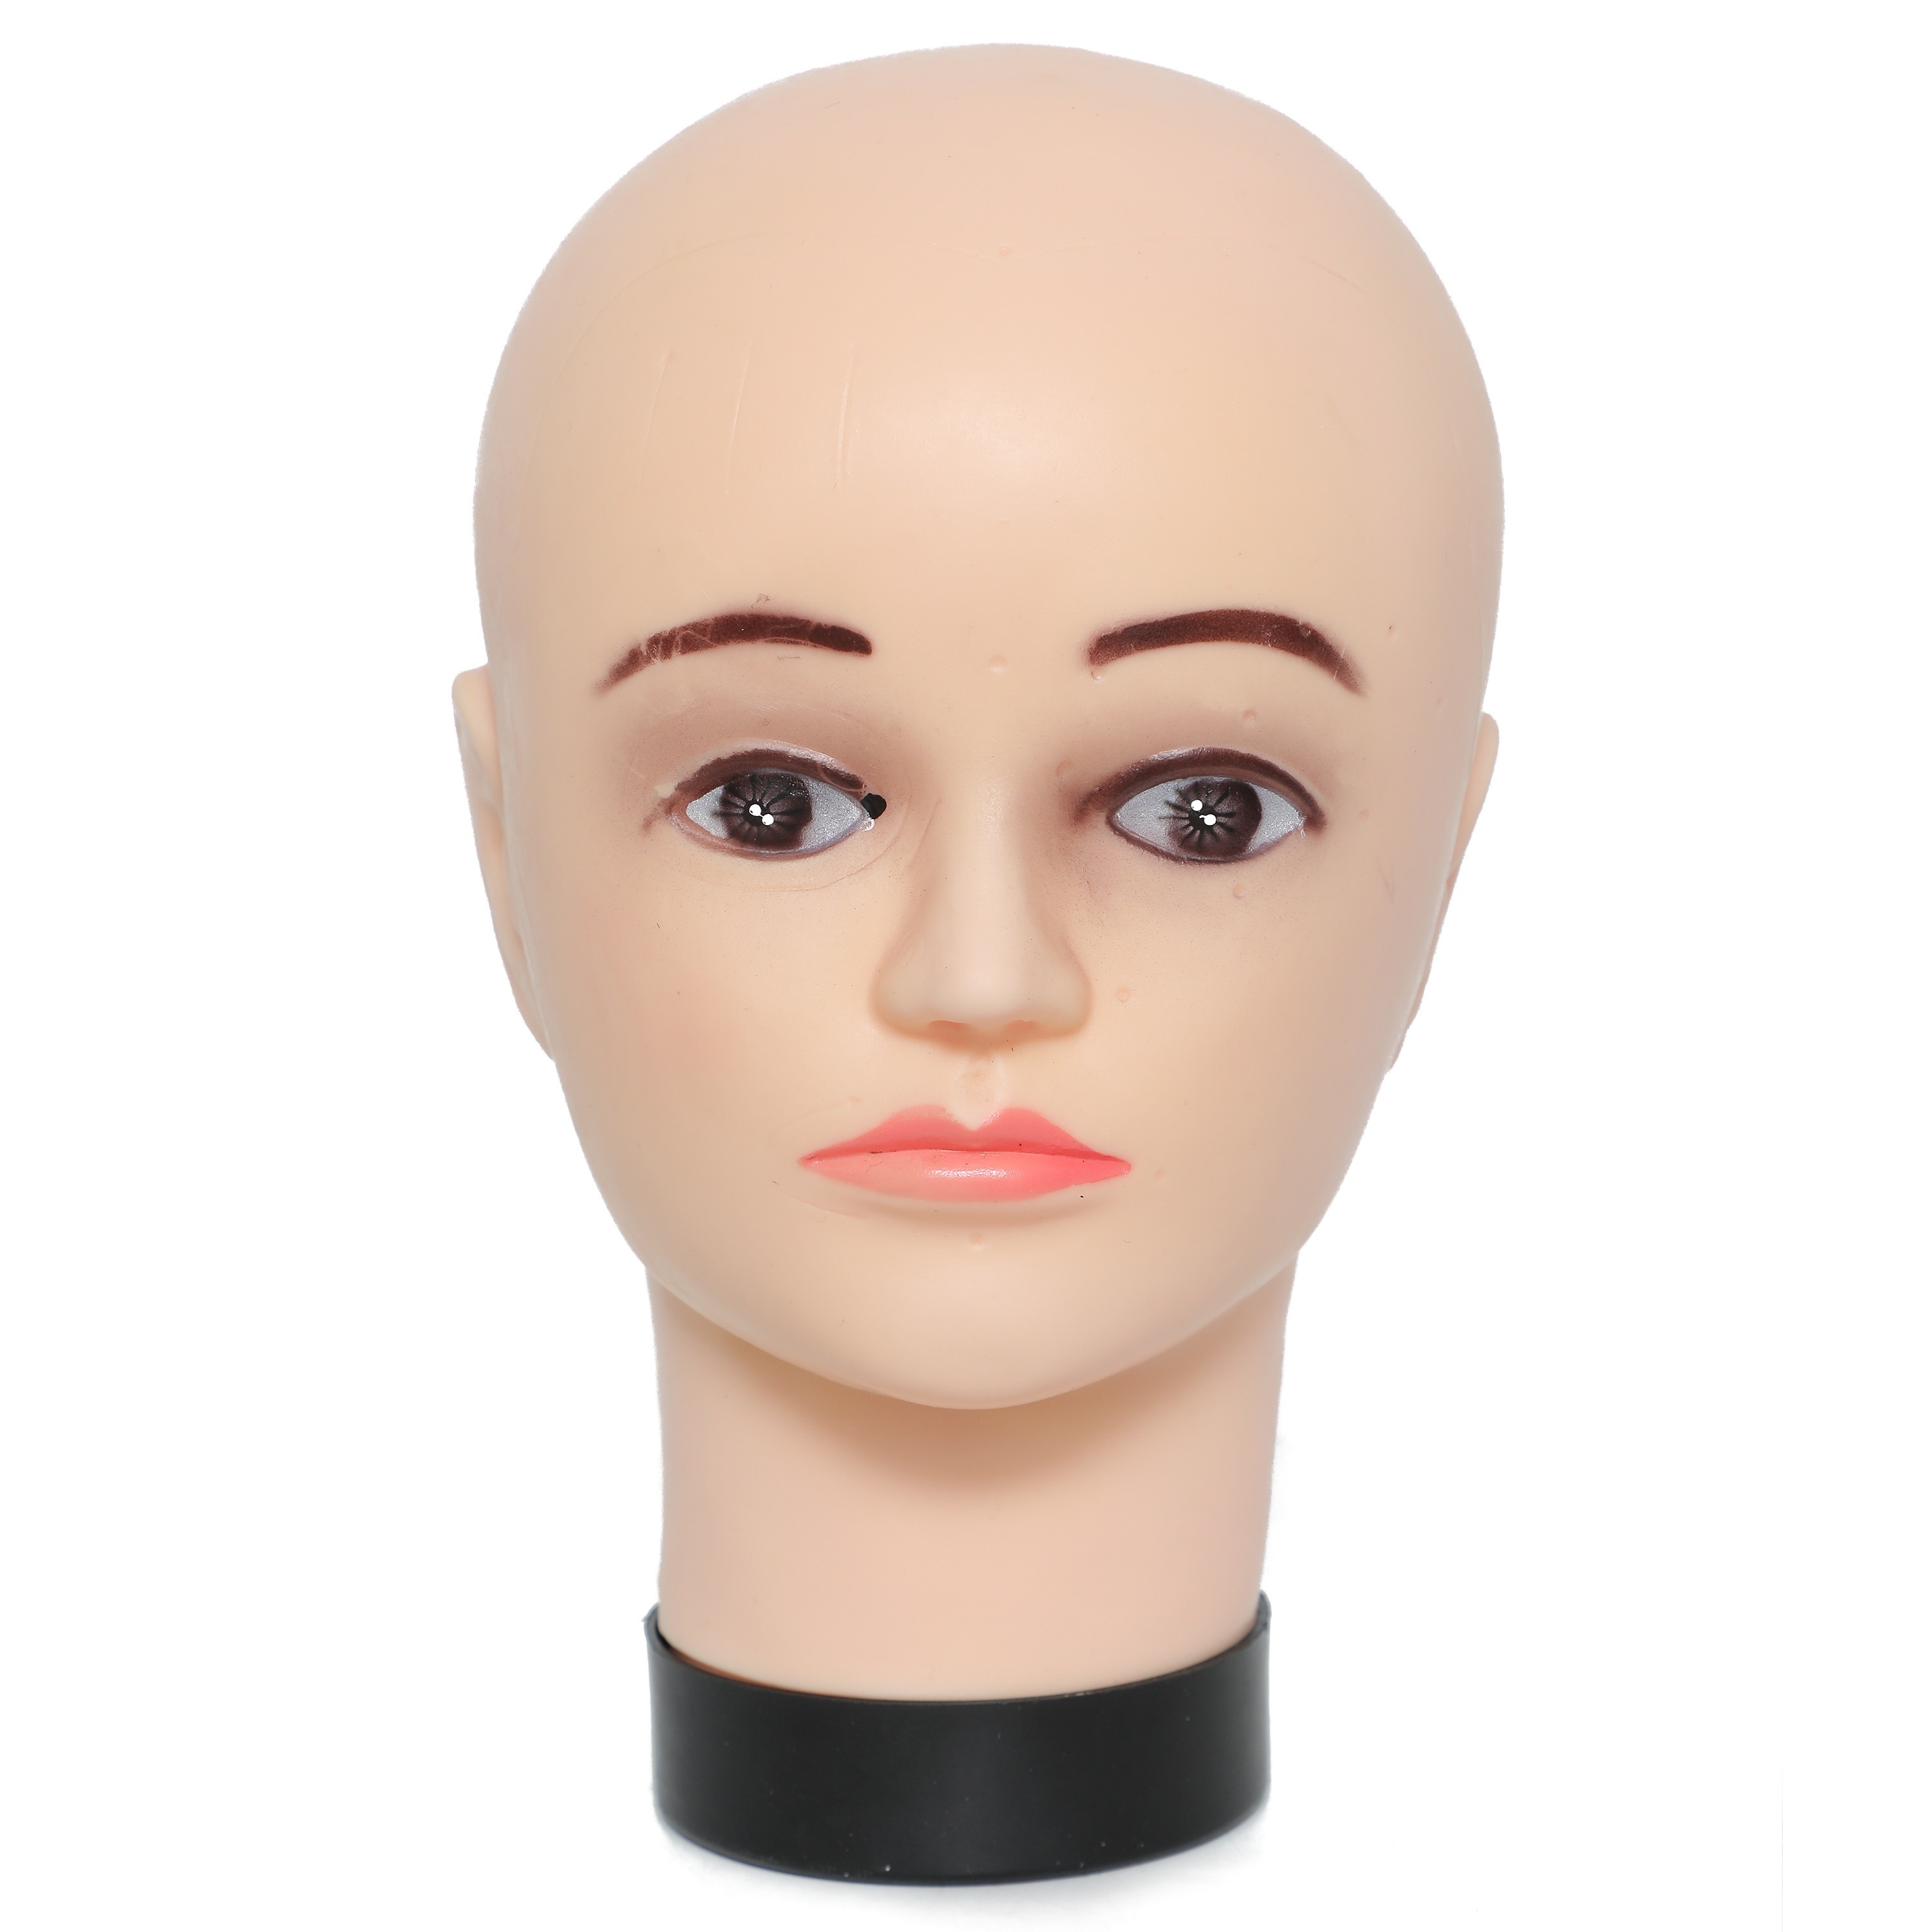  49cm Makeup Practice Mannequin Head, Pro Training Head